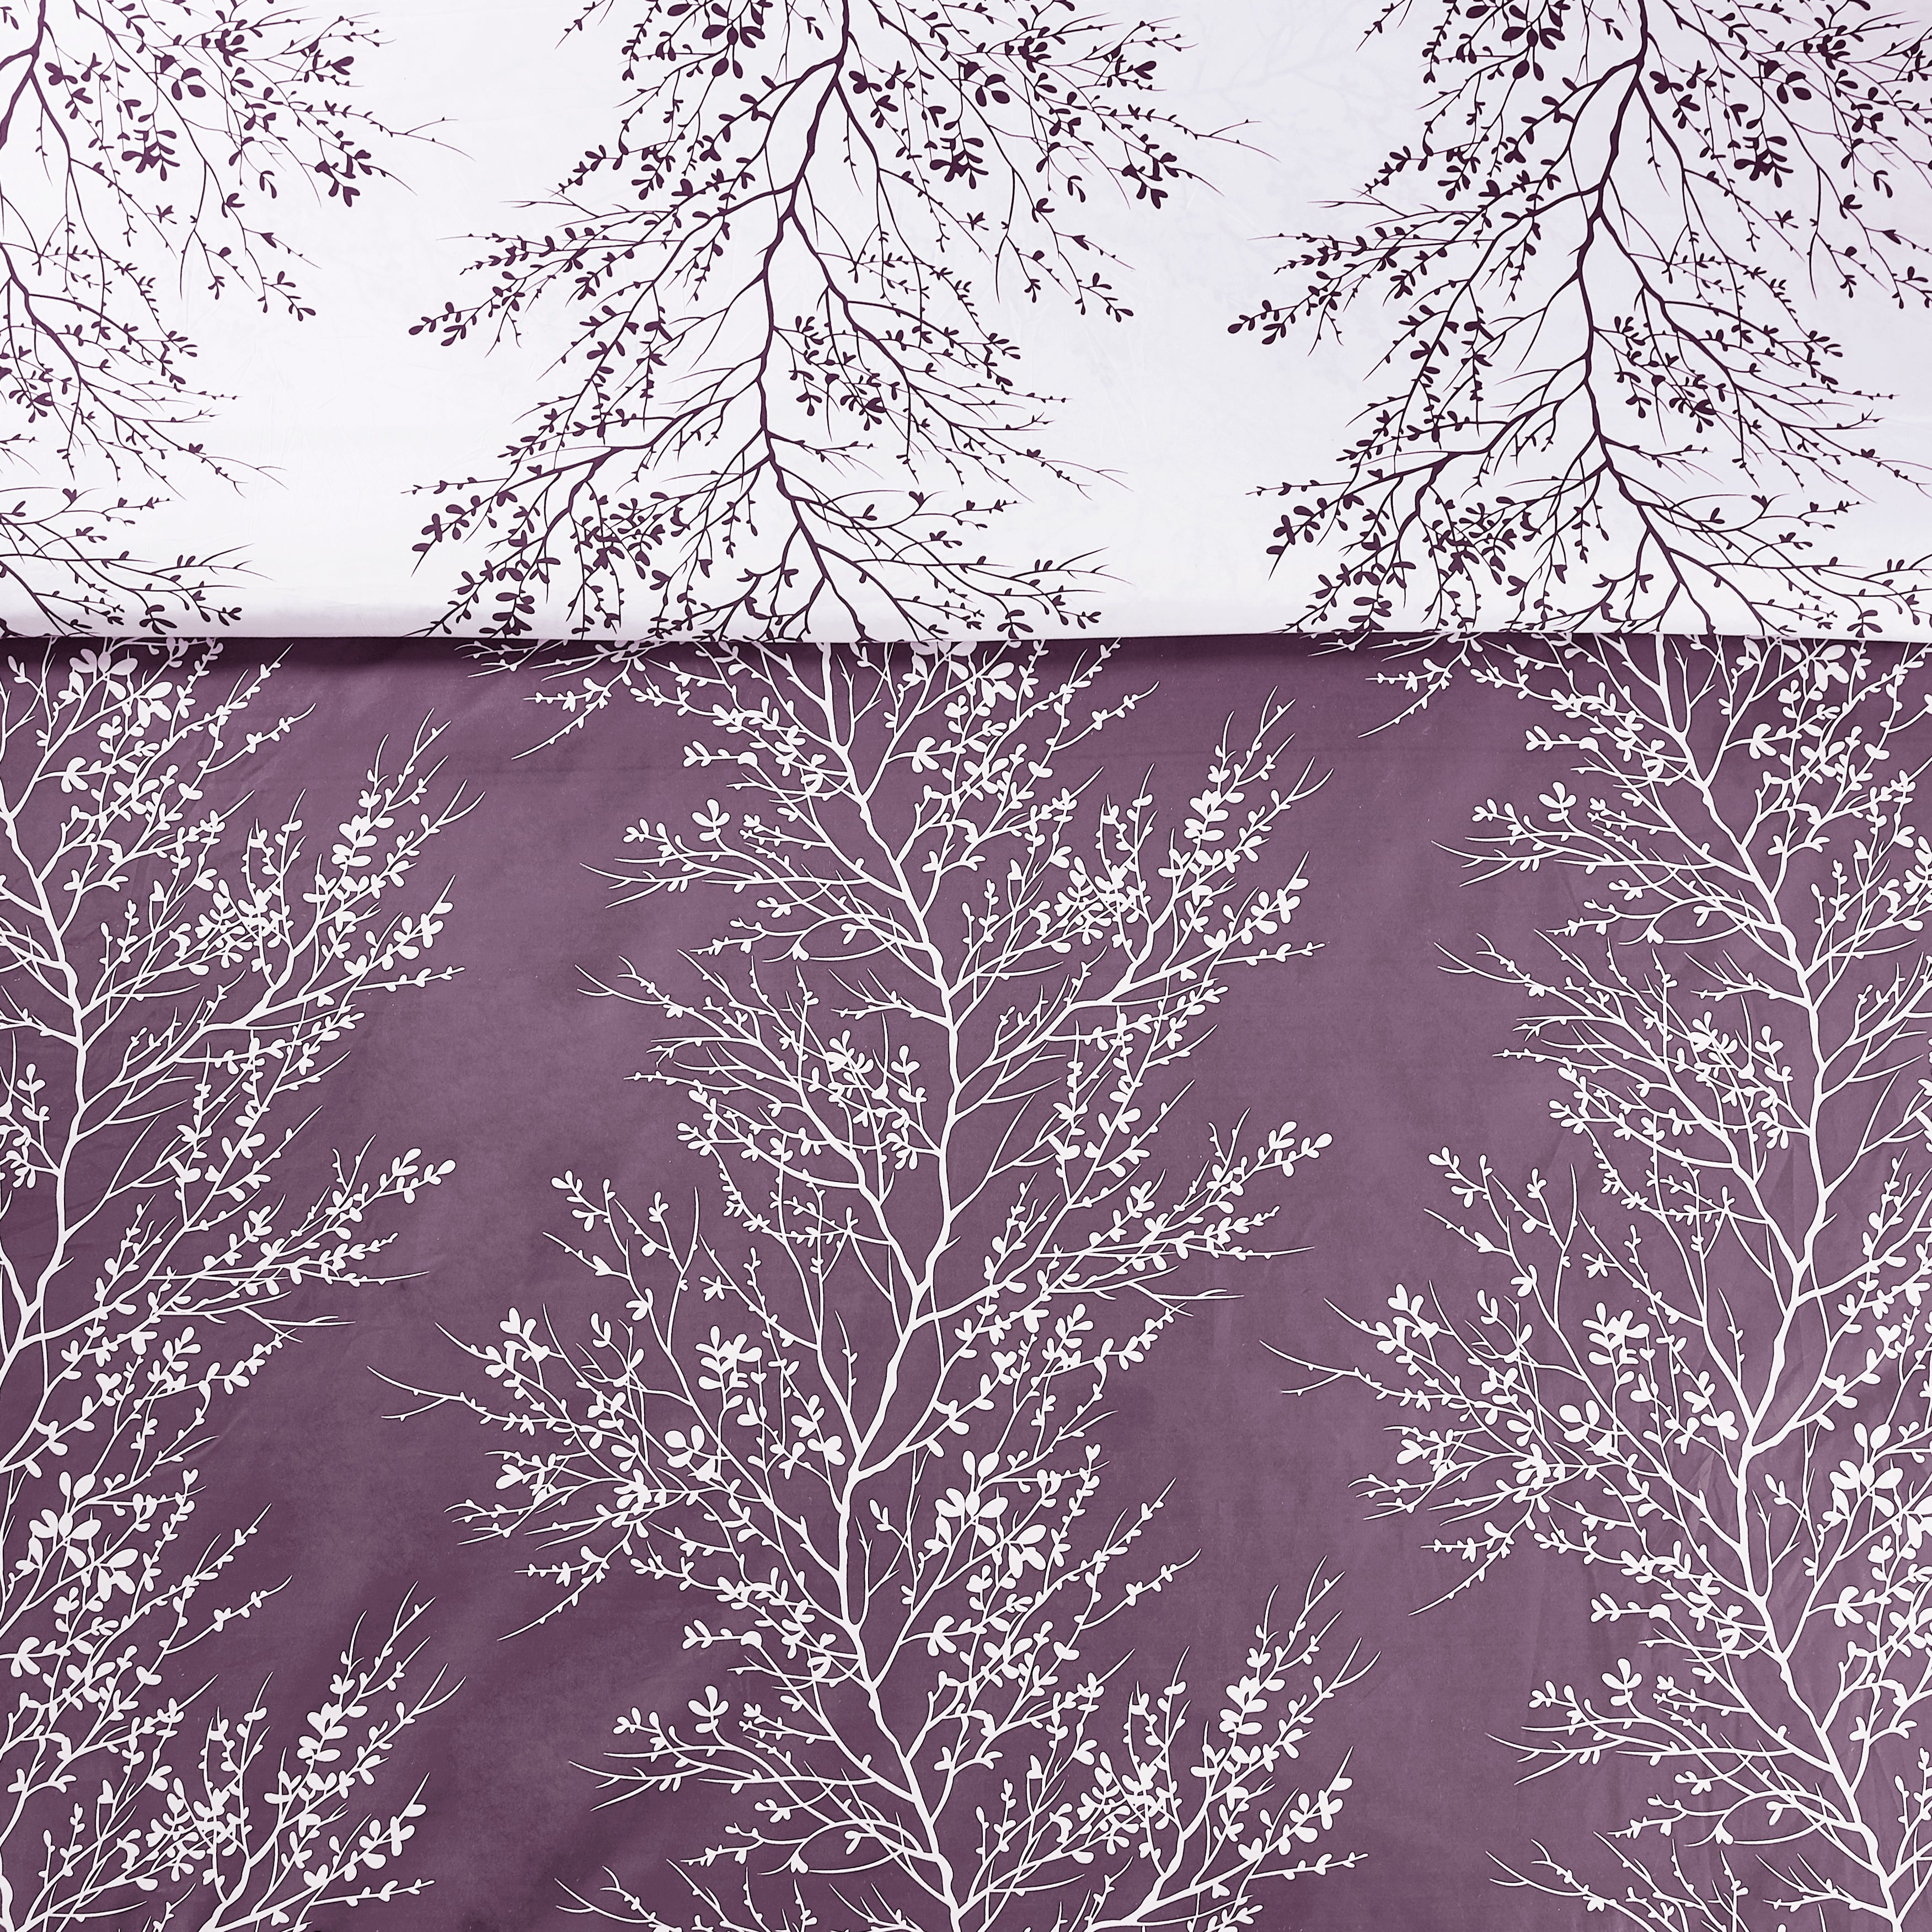 Foliage Reversible Comforter Set + Two Free Sham Pillows - Spirit Linen - Lilac